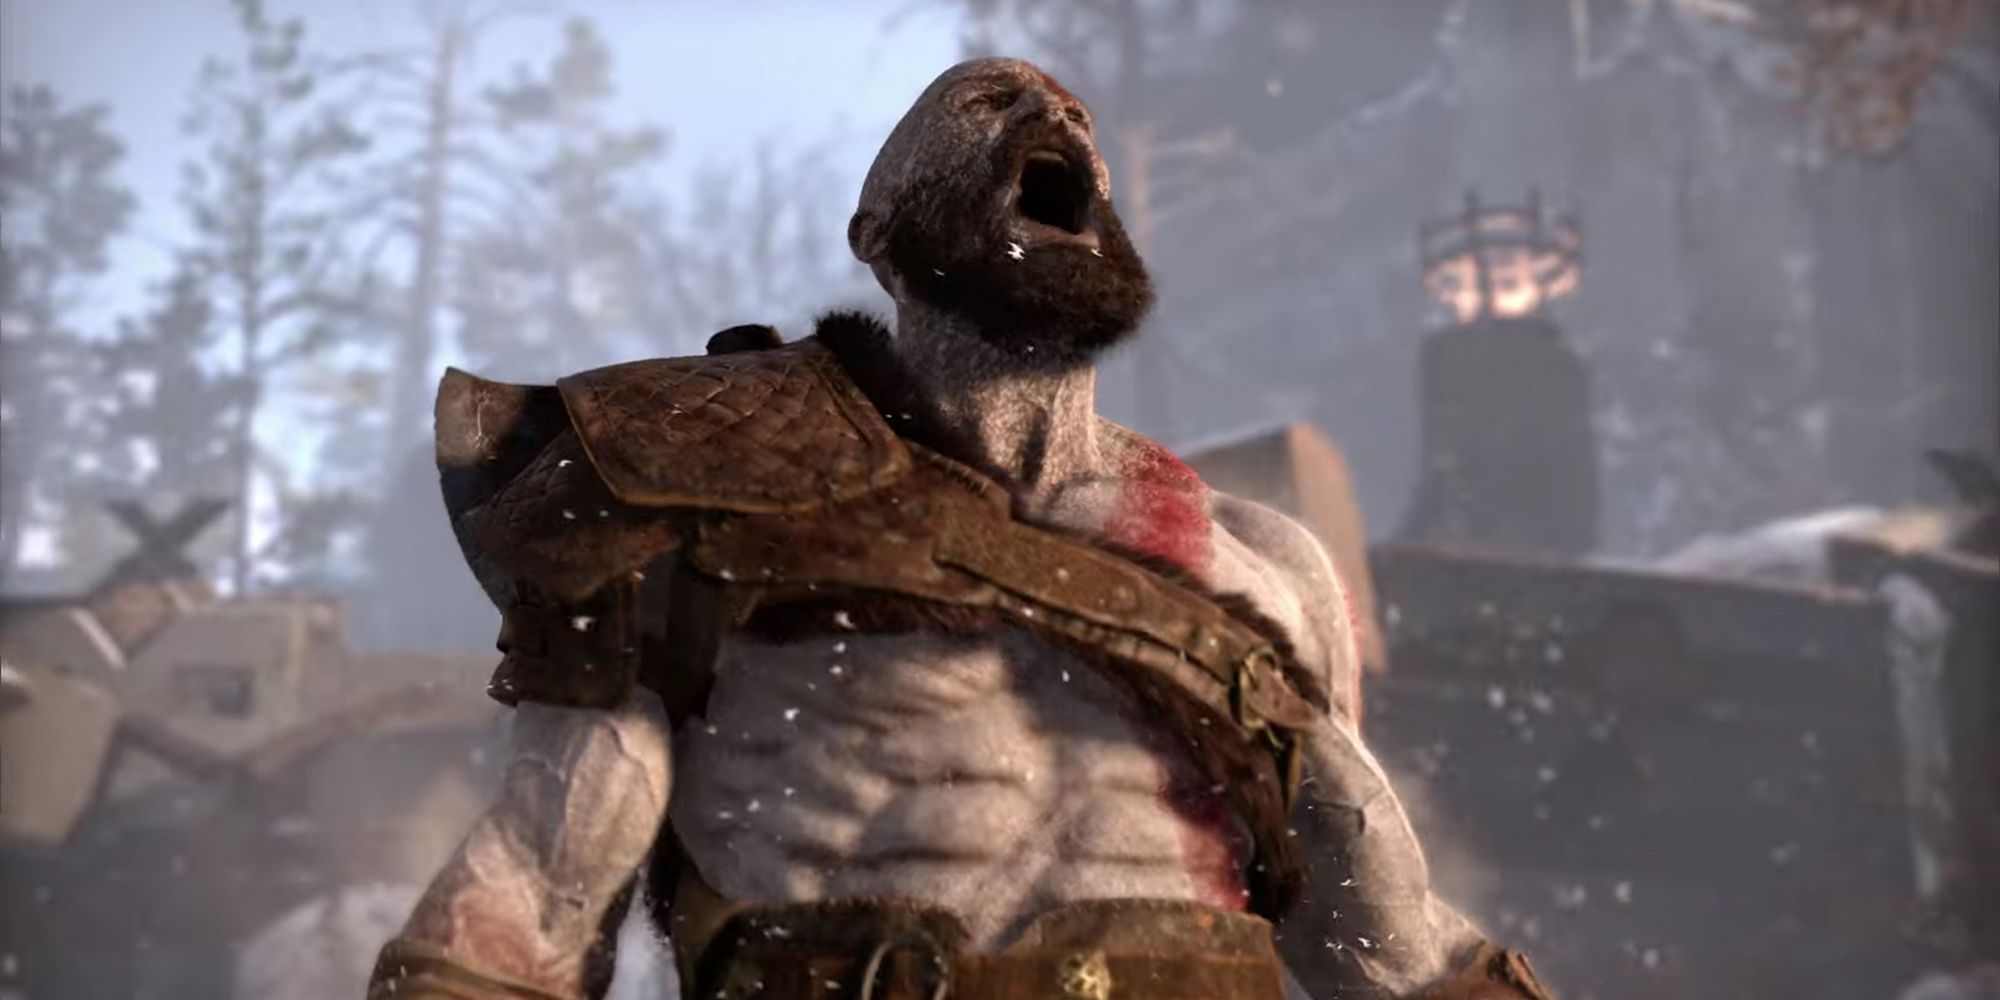 kratos is shouting in his spartan rage type - Playground